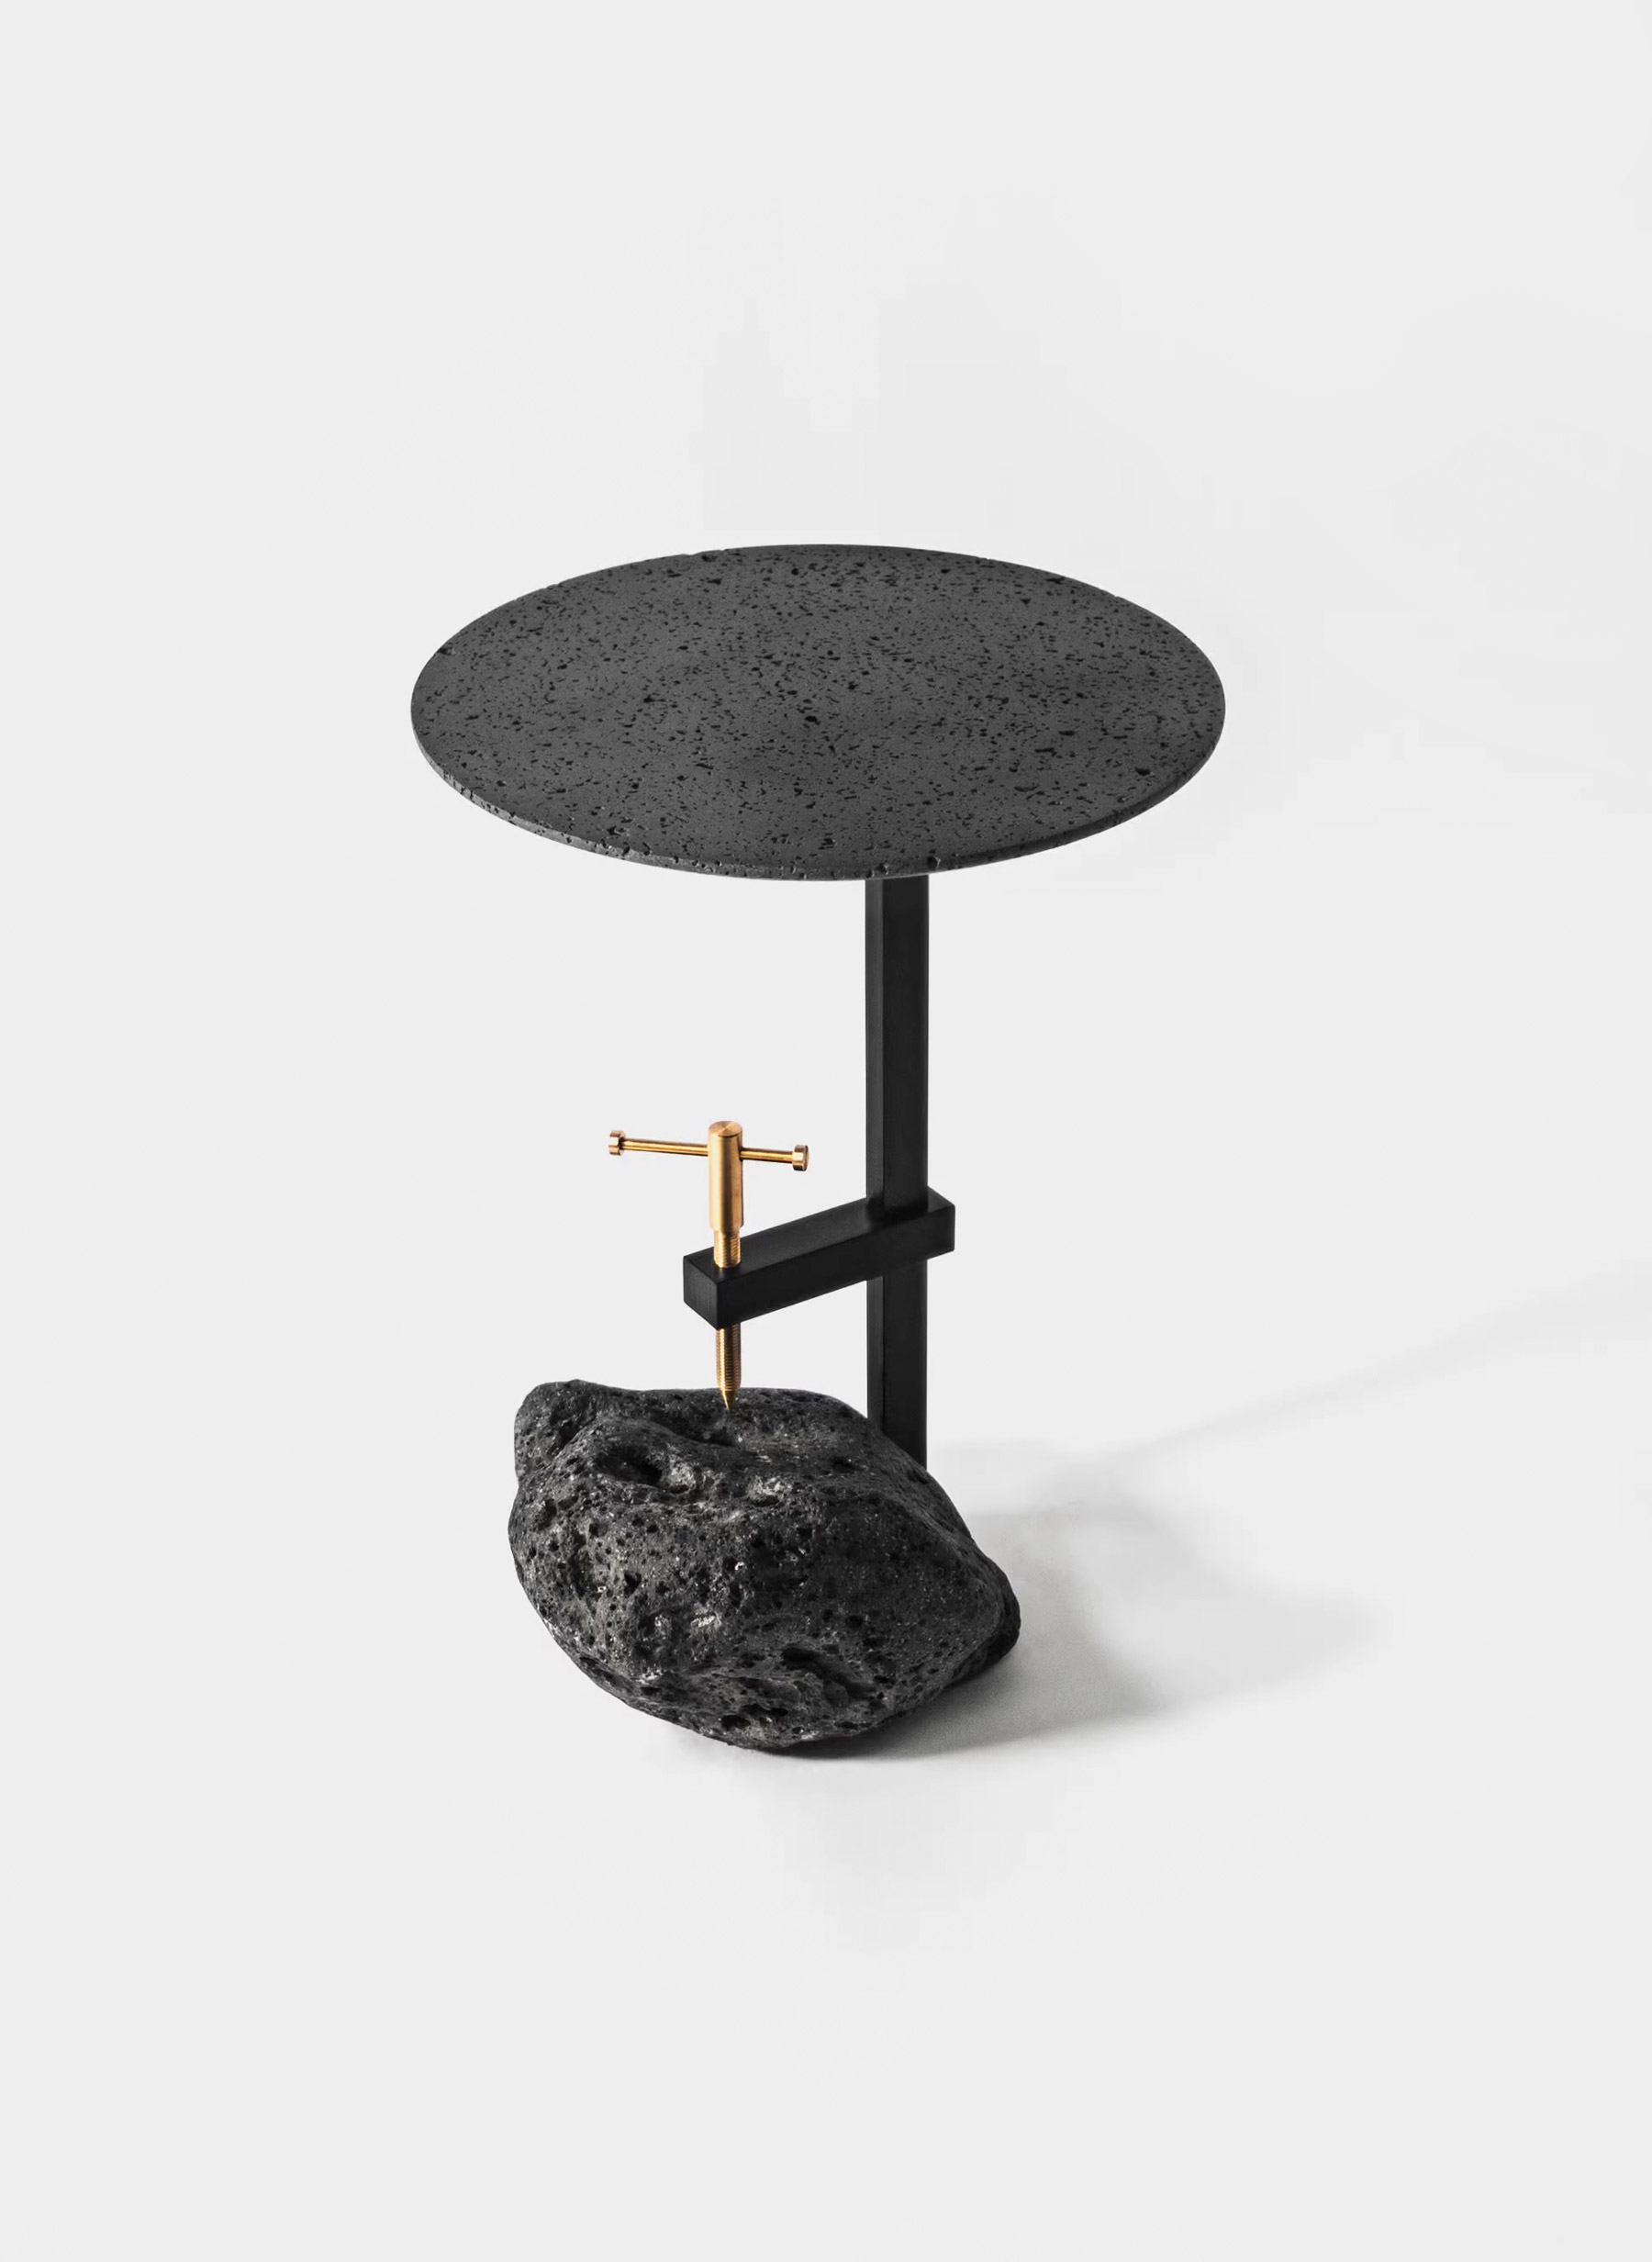 Minimalist “me-F” side table by Buzao design studio | Aesence